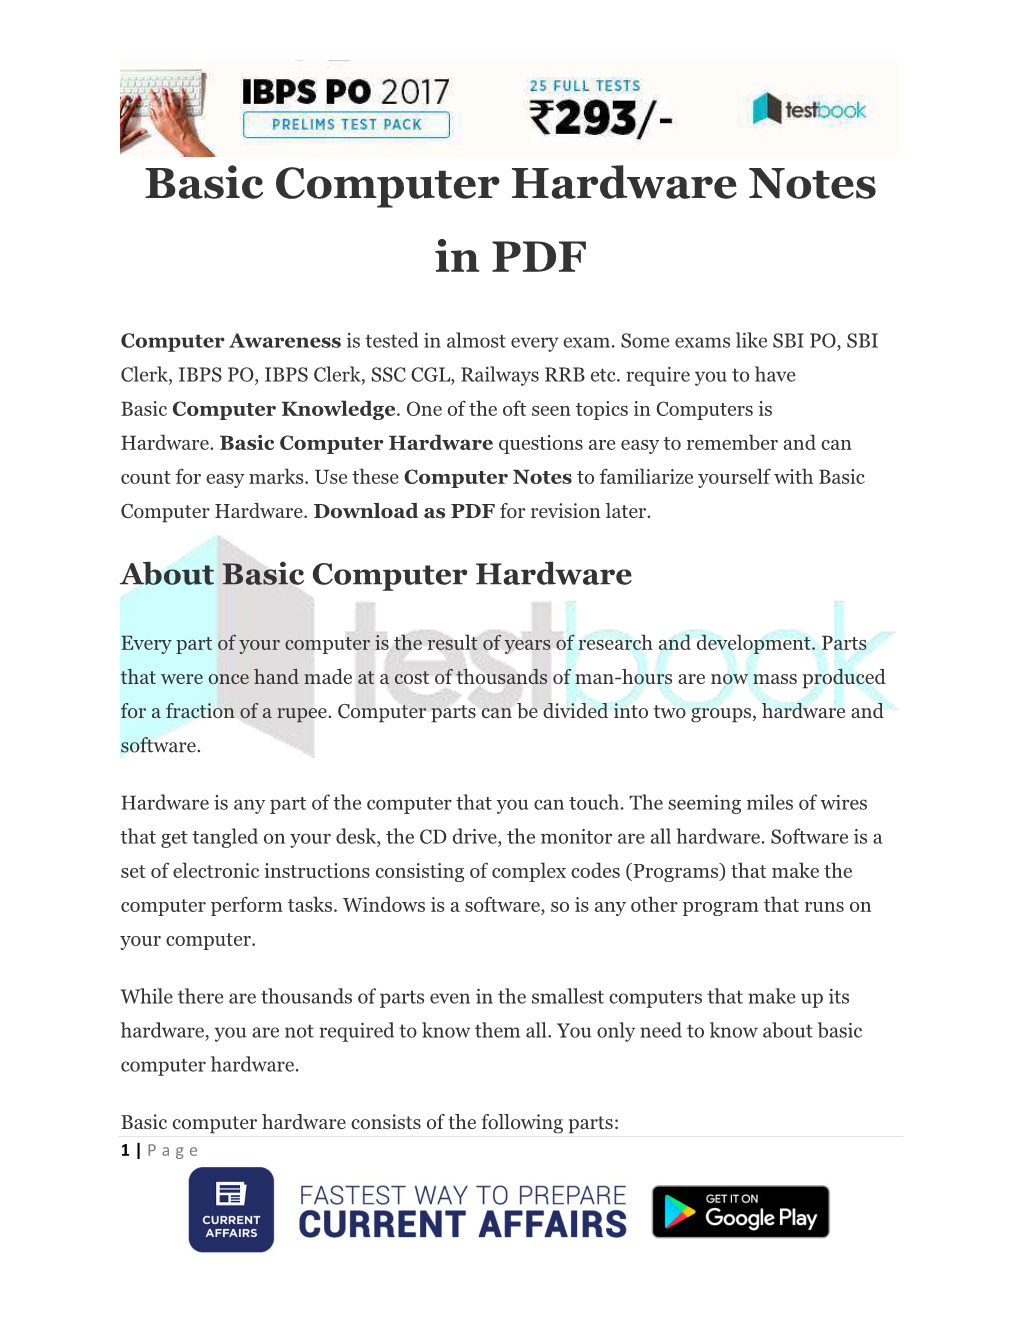 Basic Computer Hardware Notes in PDF